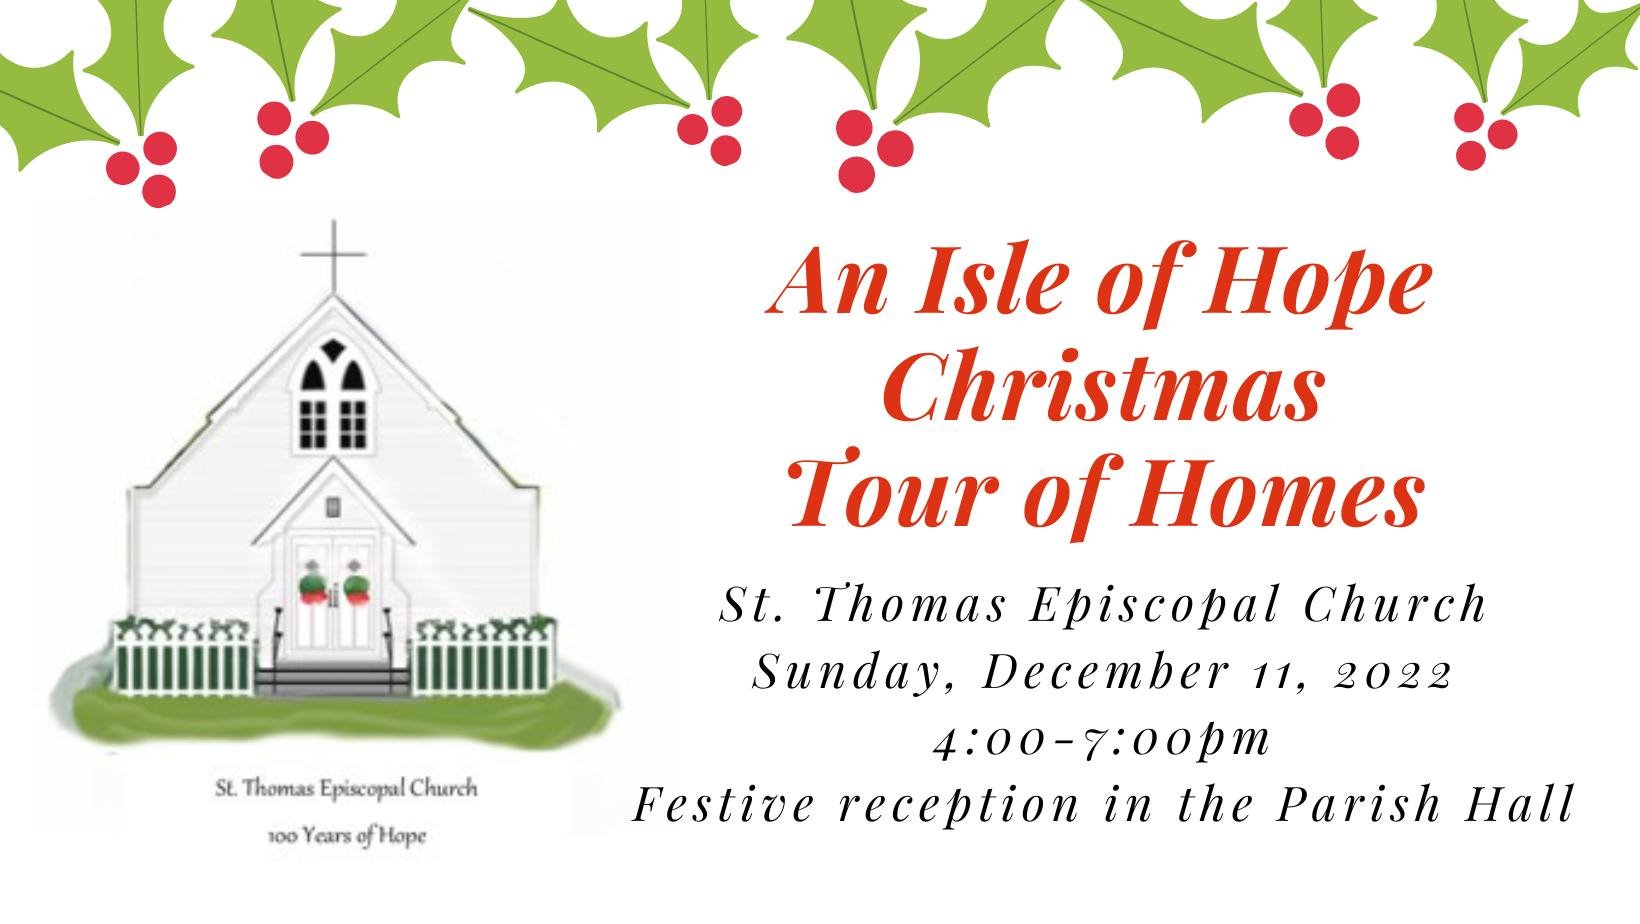 An Isle of Hope Christmas Tour of Homes